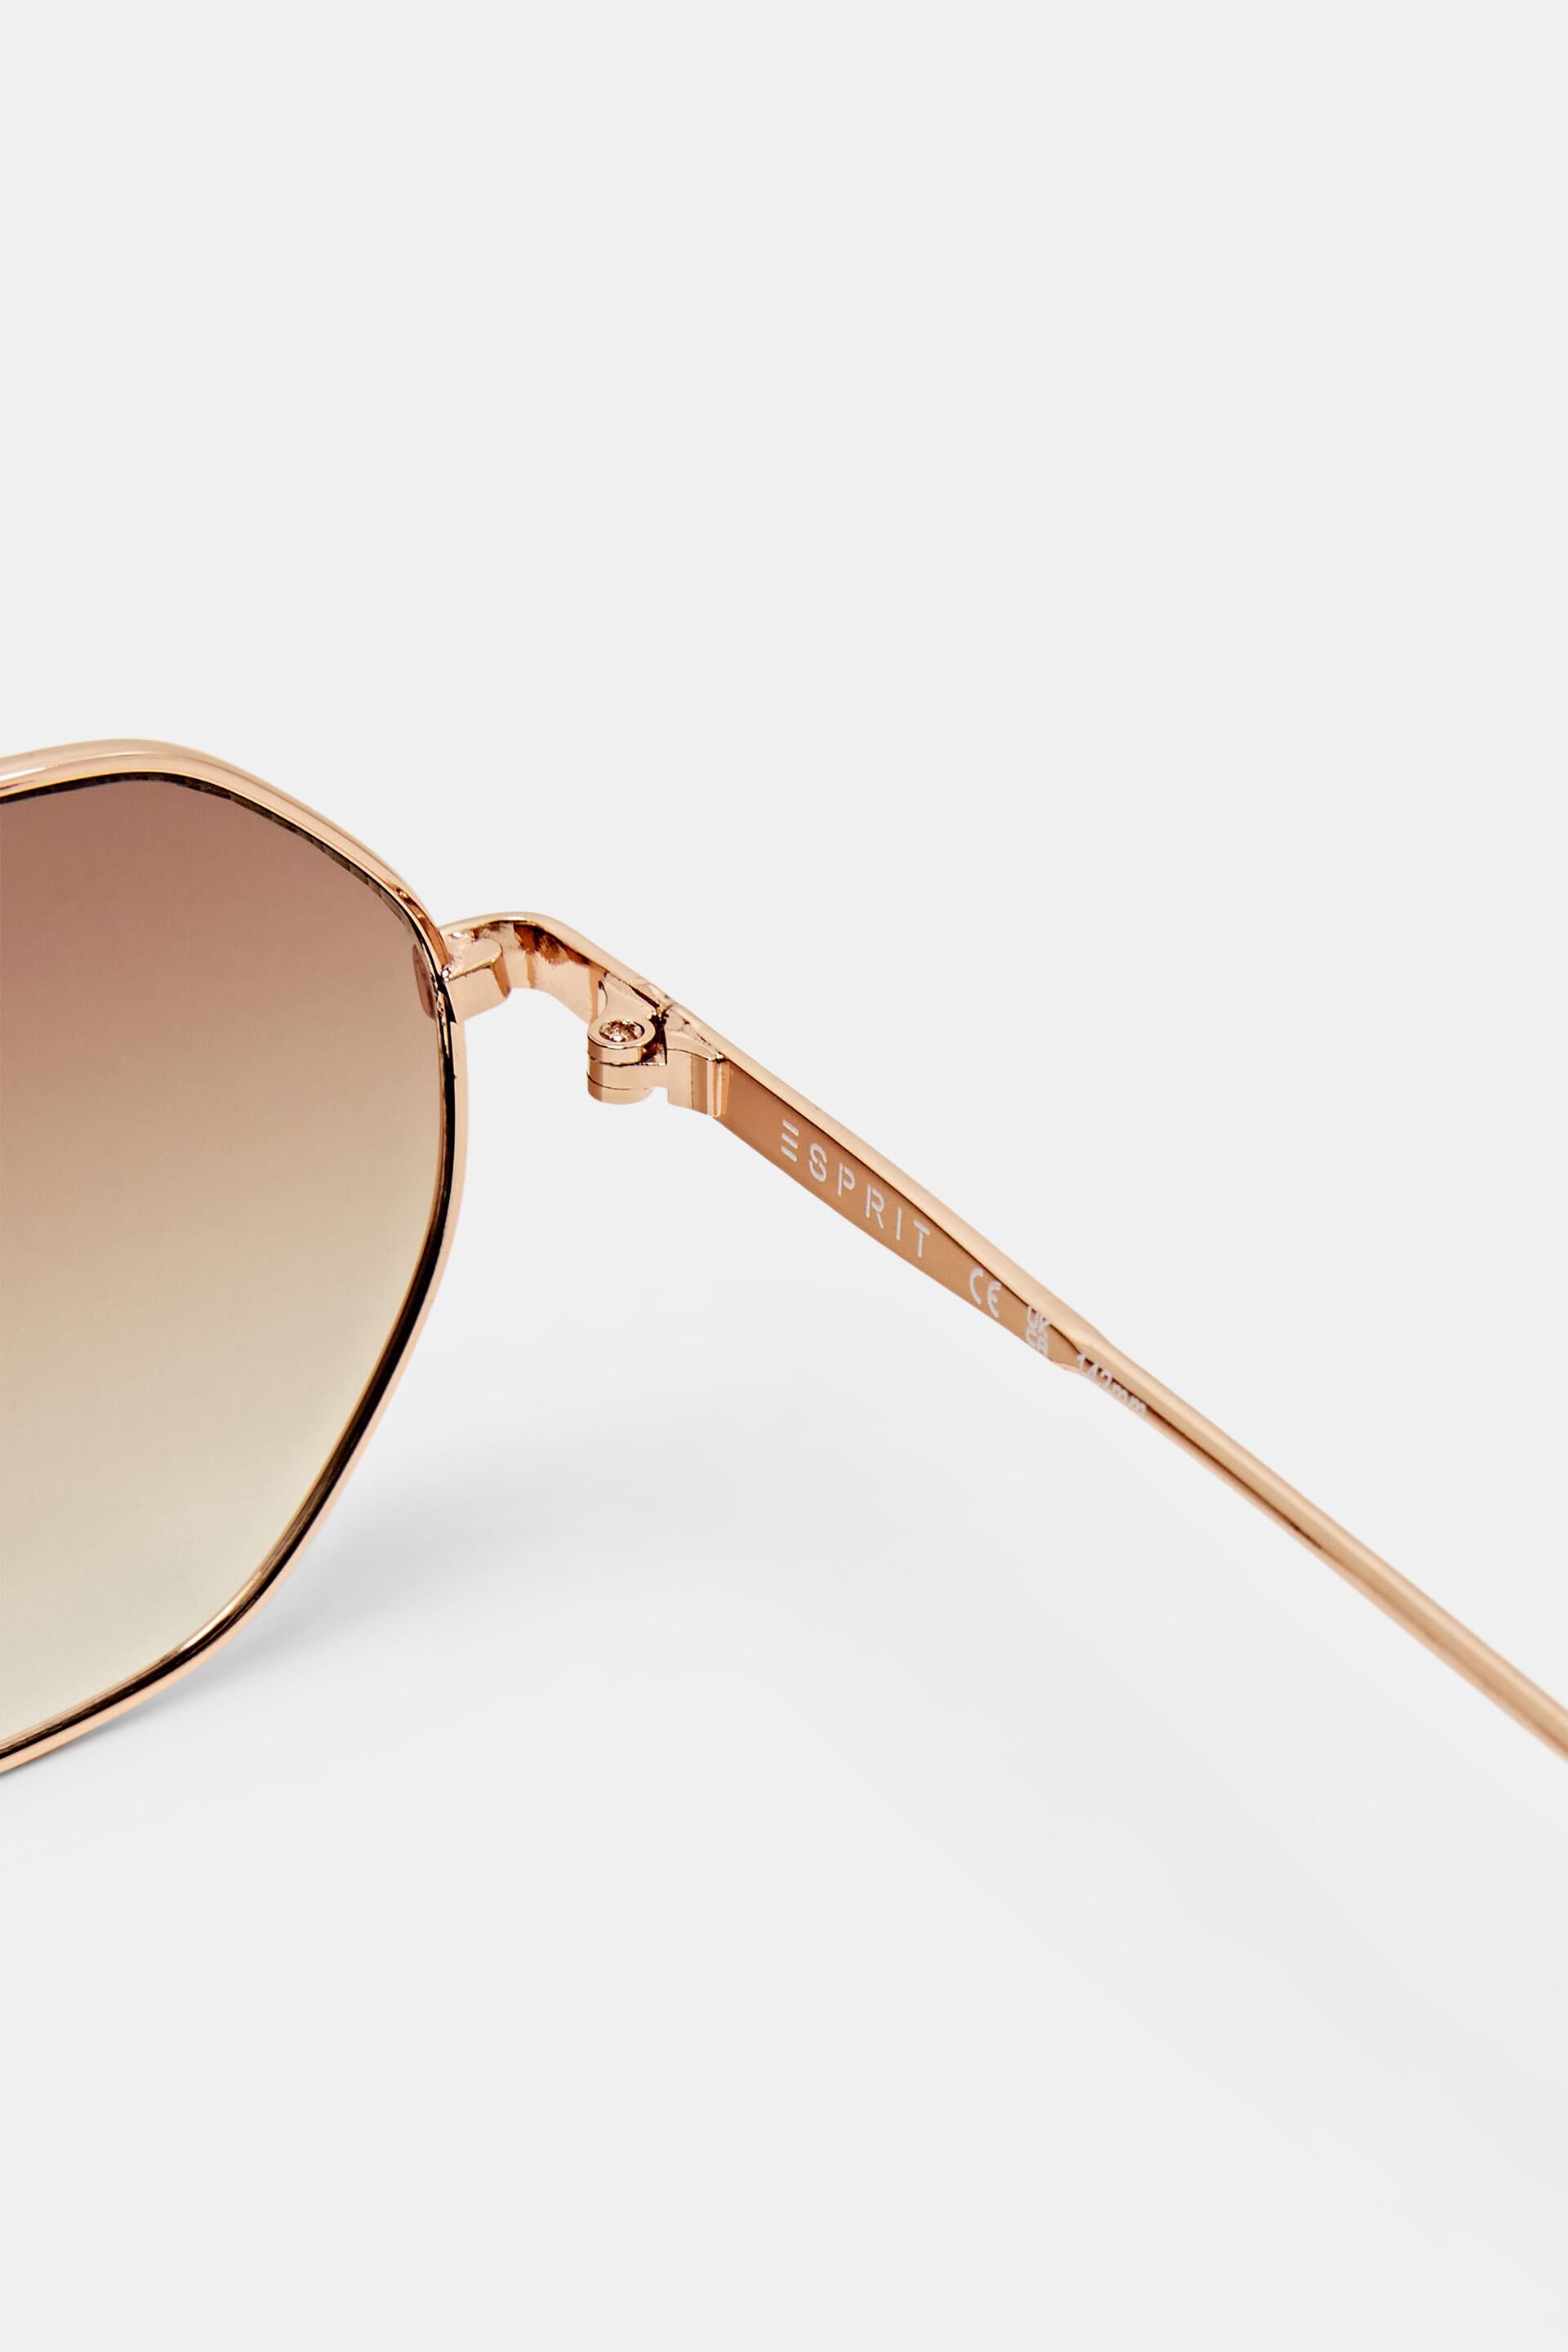 Esprit Online Store Sonnenbrille mit Metallrahmen filigranem goldfarbenem